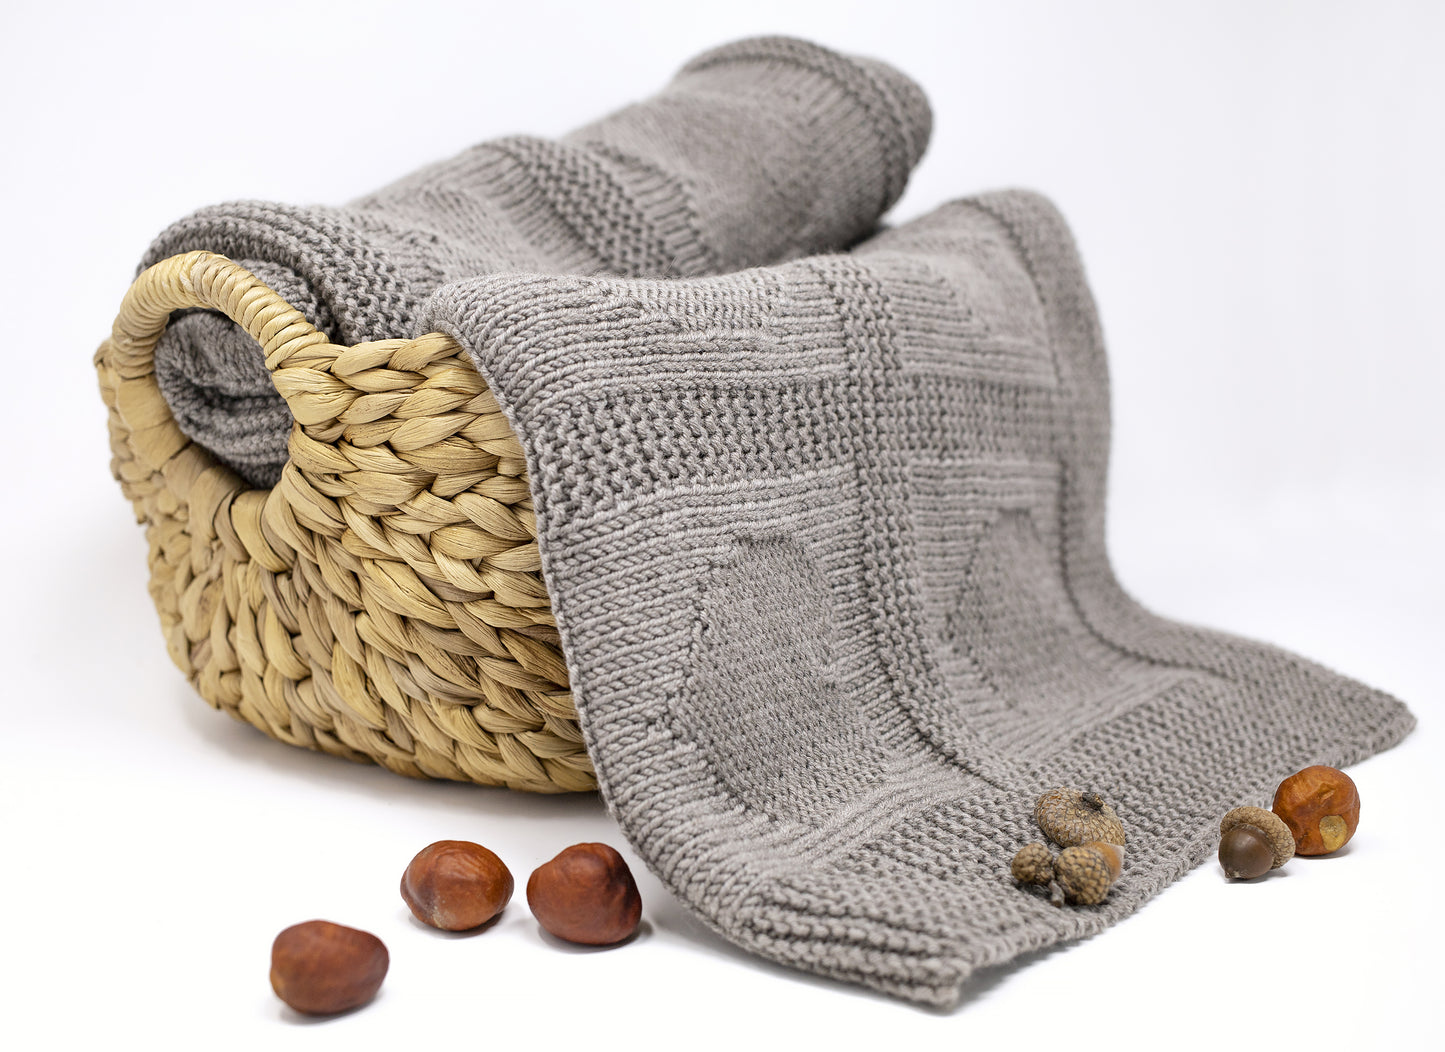 beige brown merino wool hand-knitted baby blanket in Hearts knitting pattern in a basket